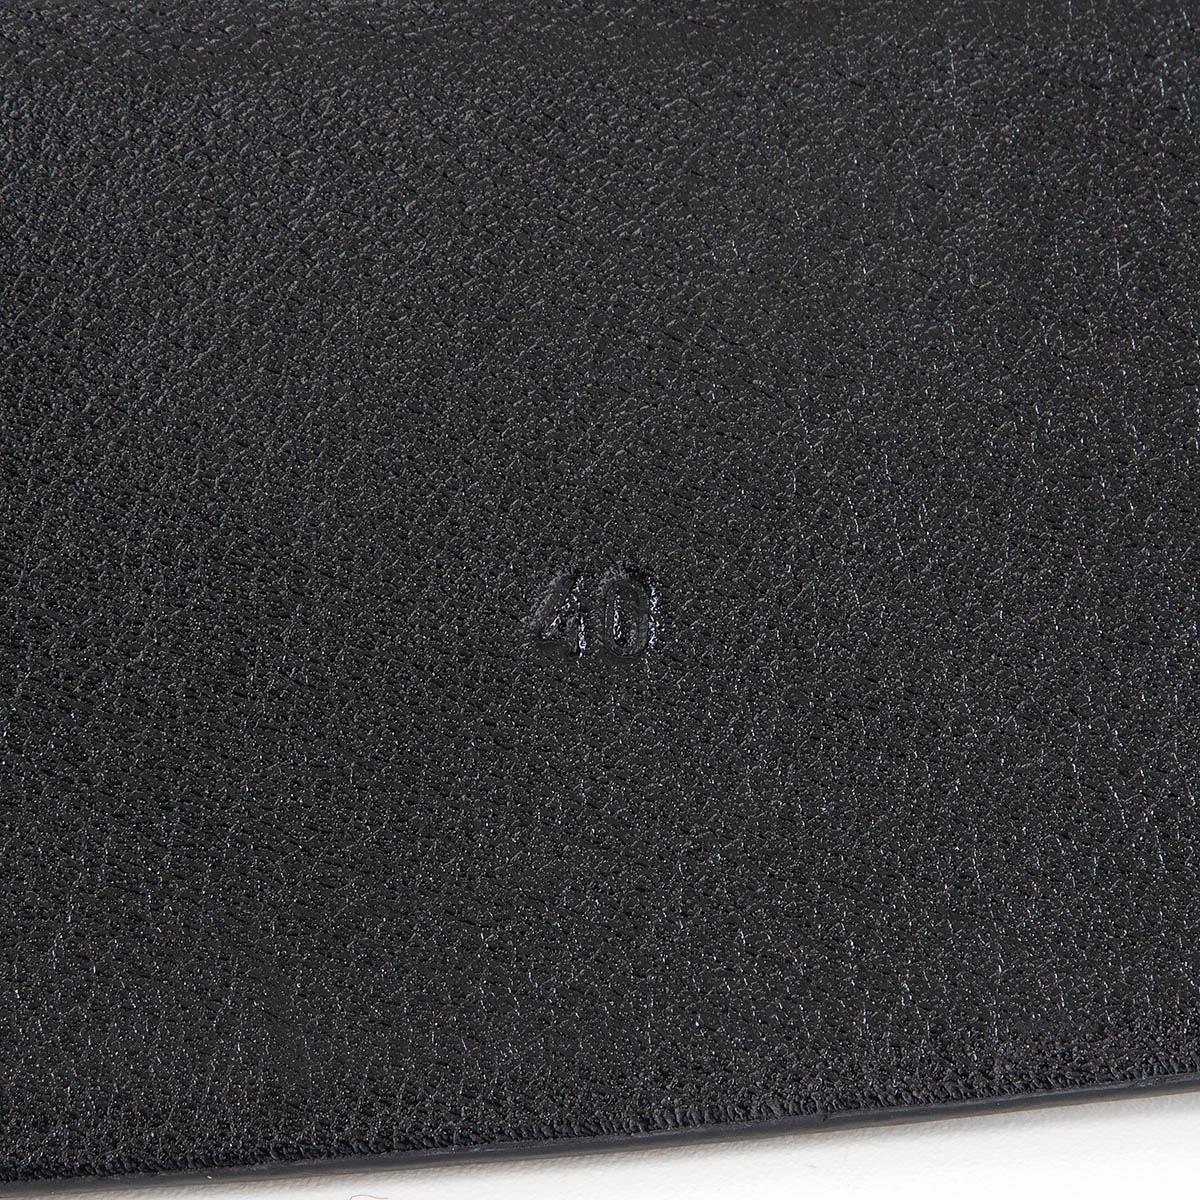 JIL SANDER black glazed leather WIDE WAIST Belt 40 L In Good Condition For Sale In Zürich, CH